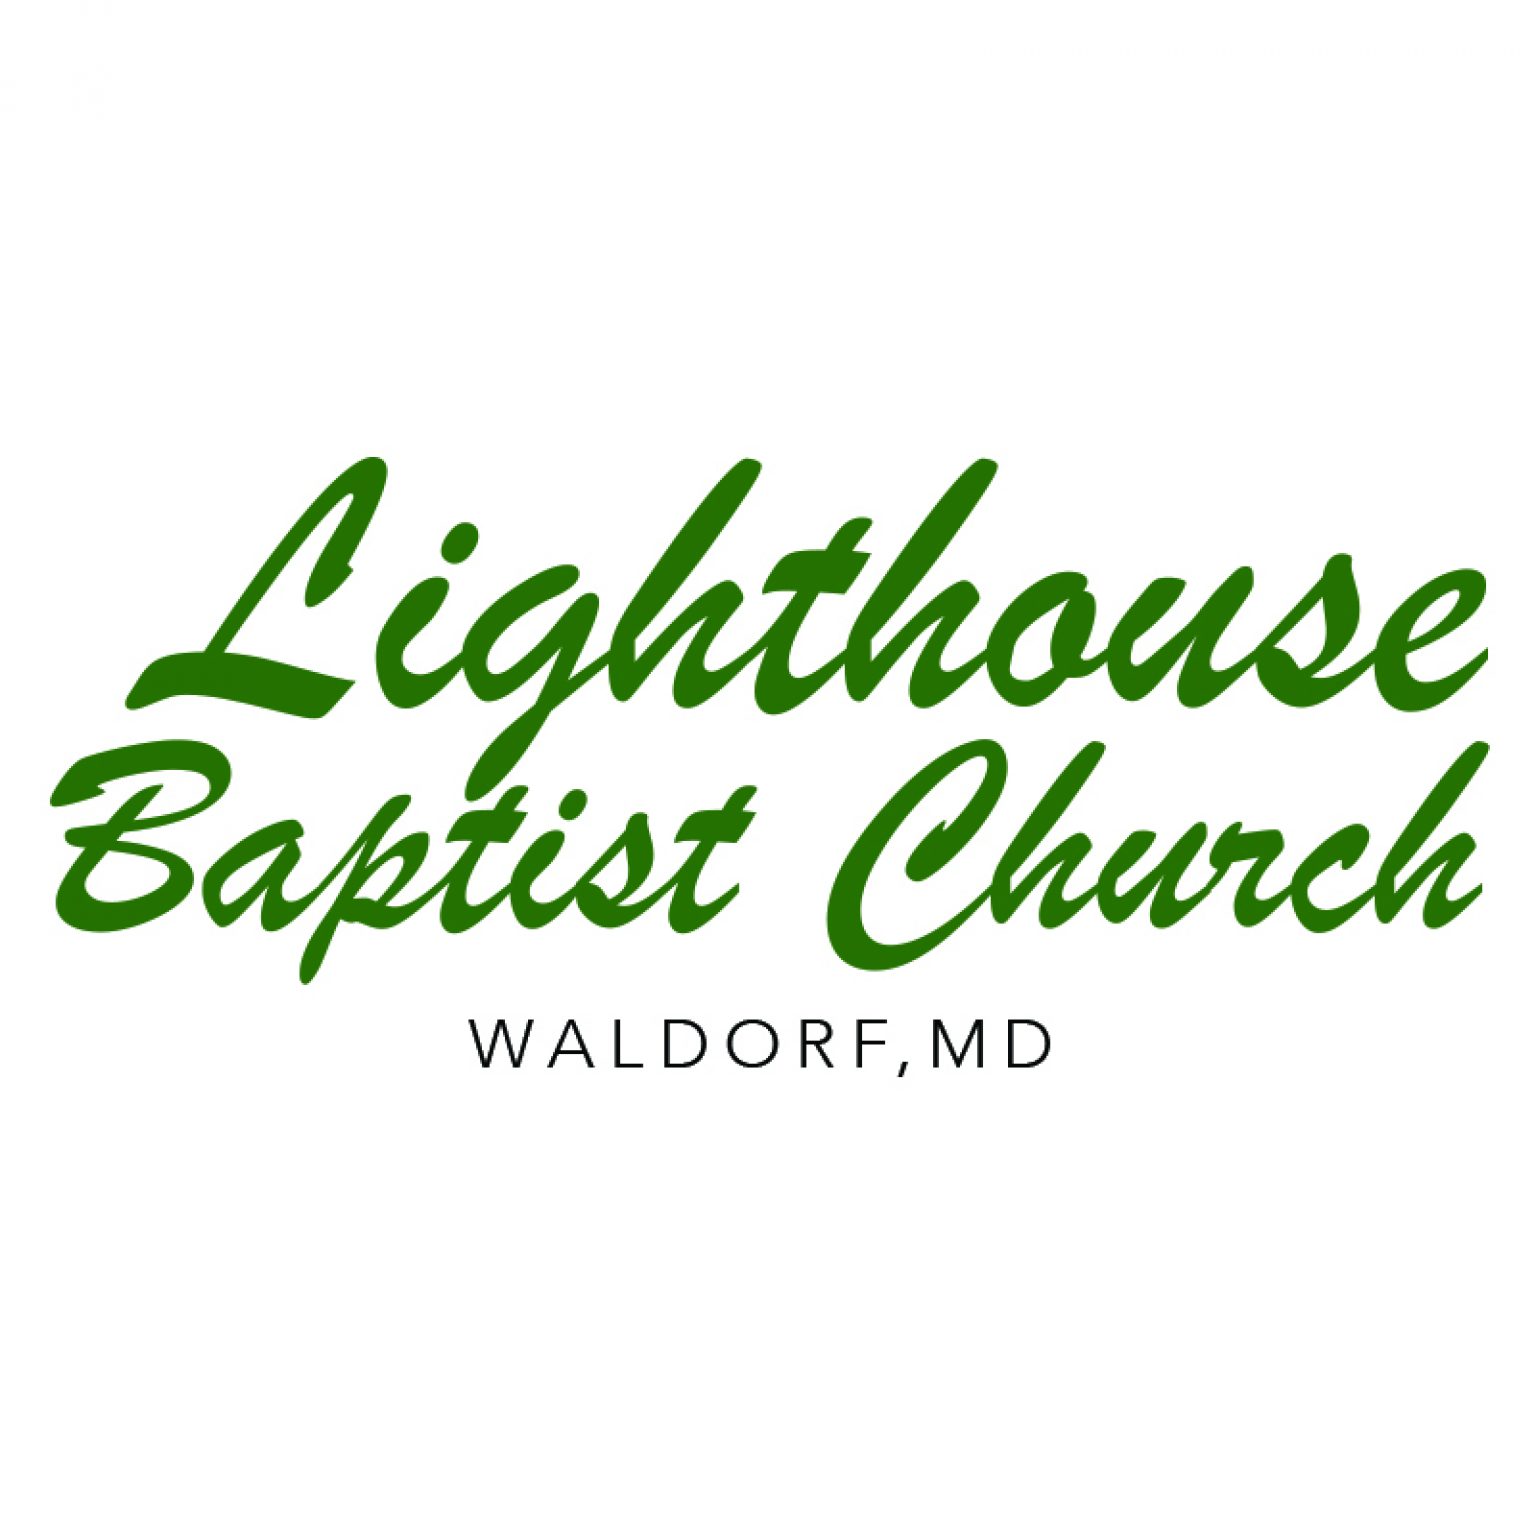 Lighthouse Baptist